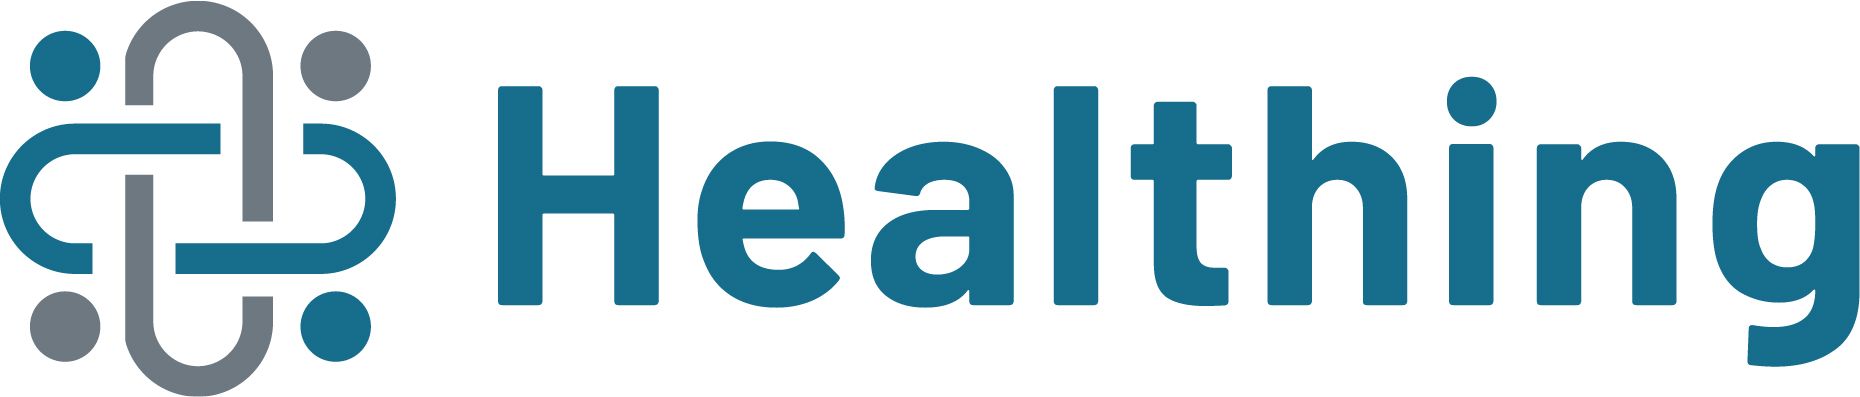 A pharmaceutical company logo